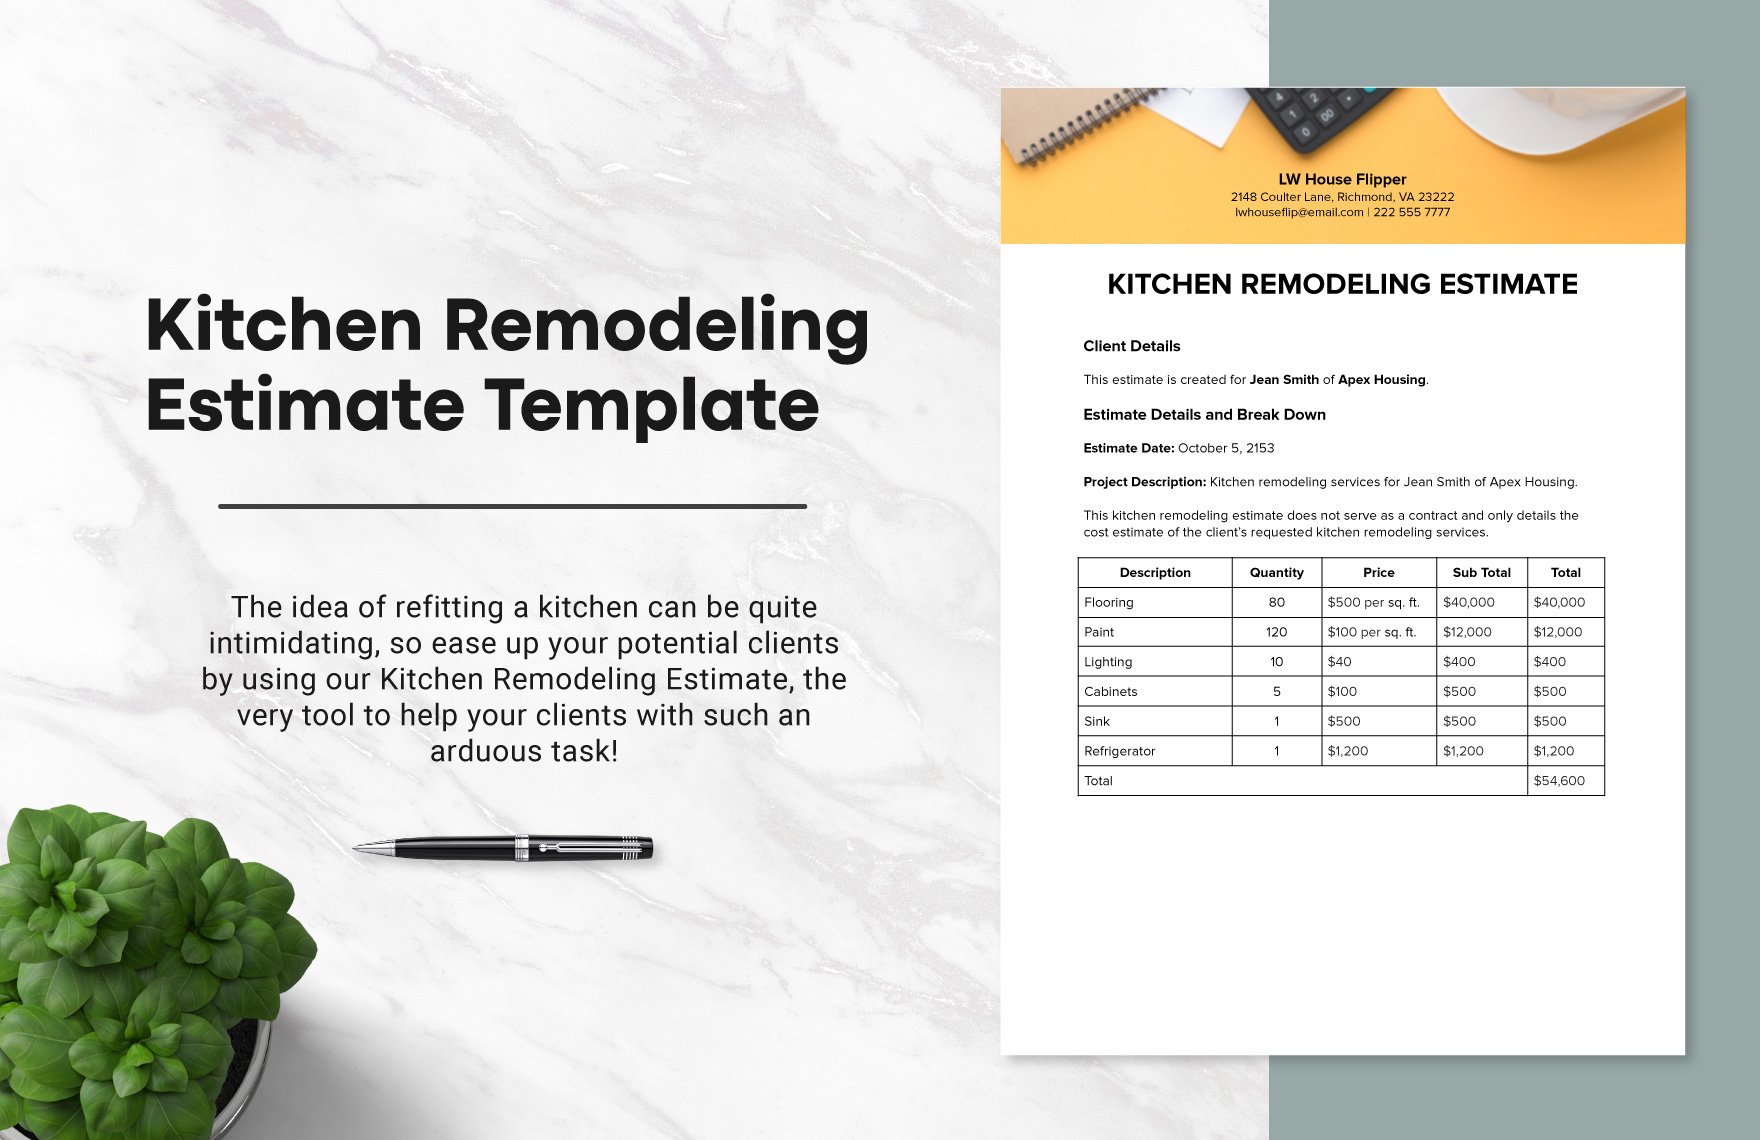 Kitchen Remodeling Estimate Template in Word, Google Docs, PDF